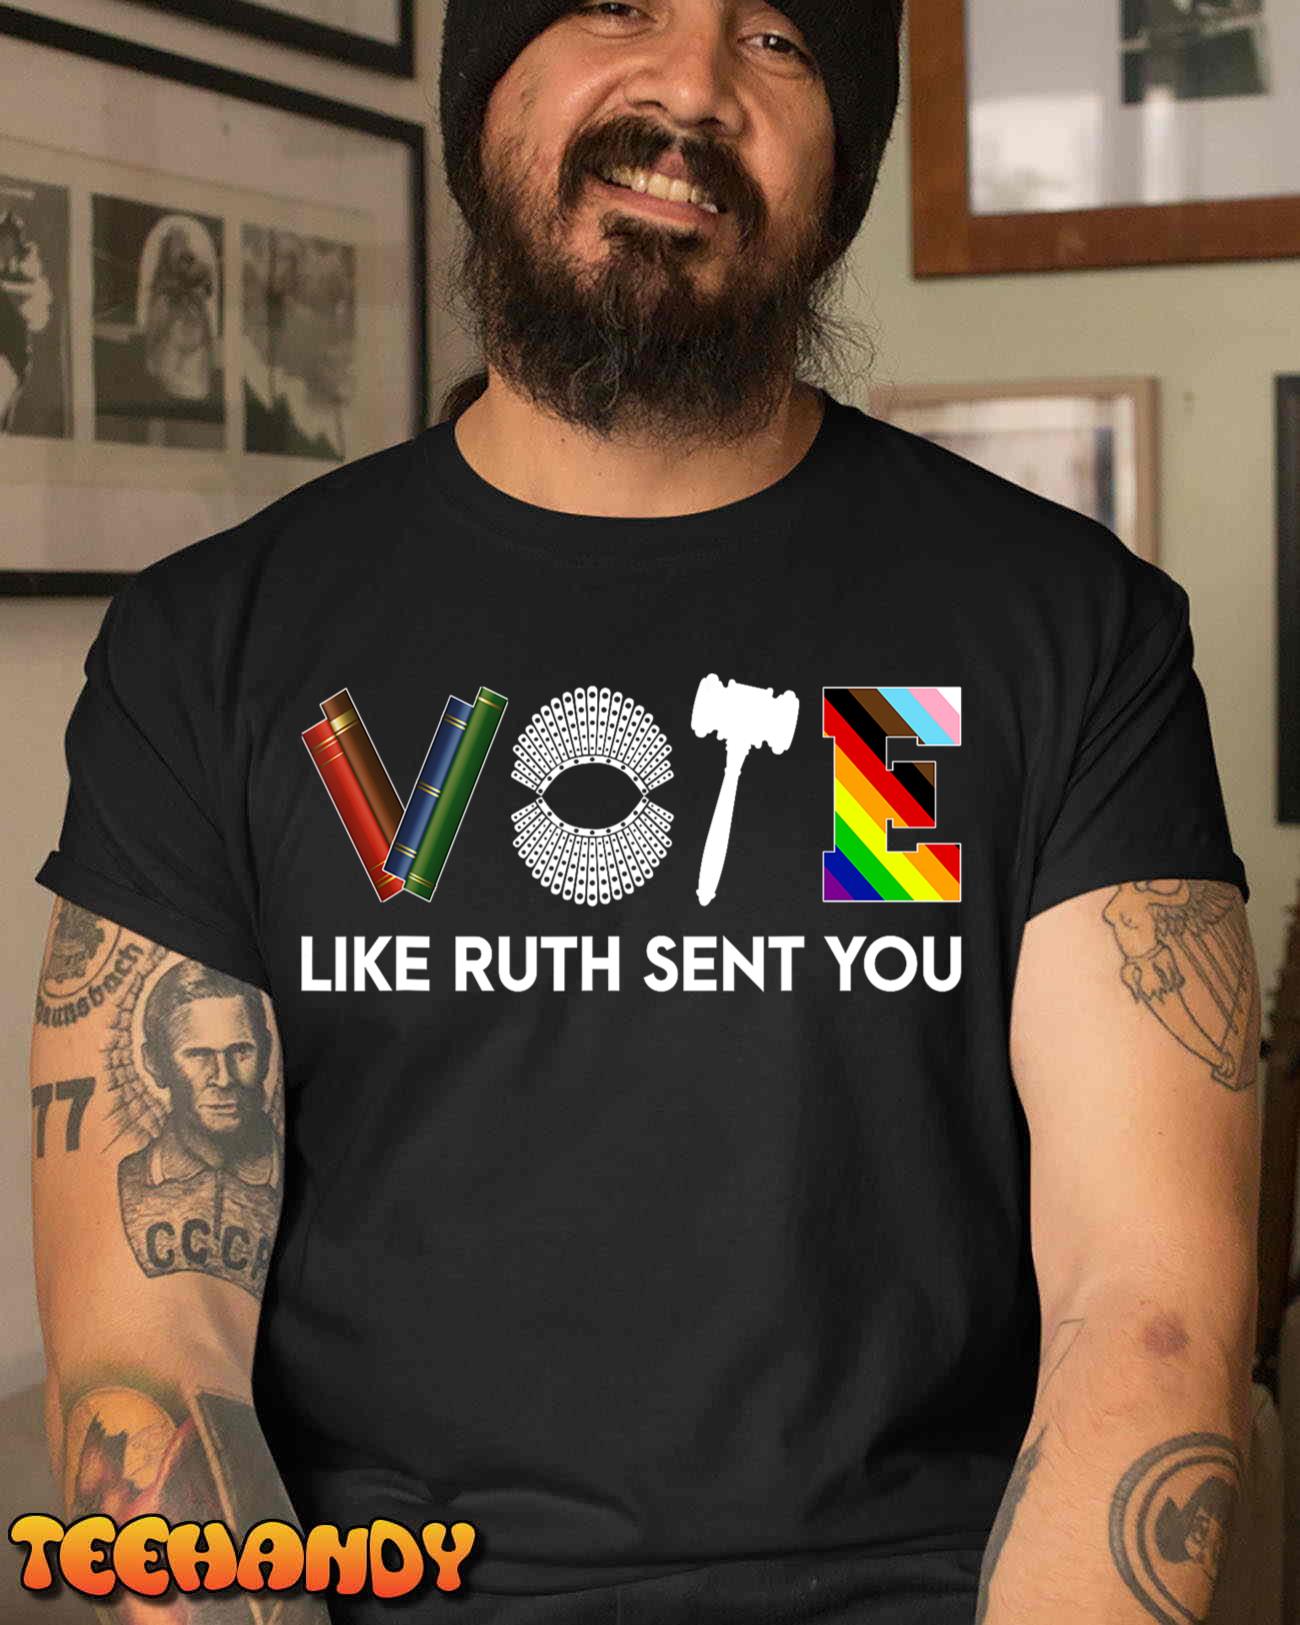 Funny Vote Like Ruth Sent You Gavel Feminists Lgbt Pride T-Shirt